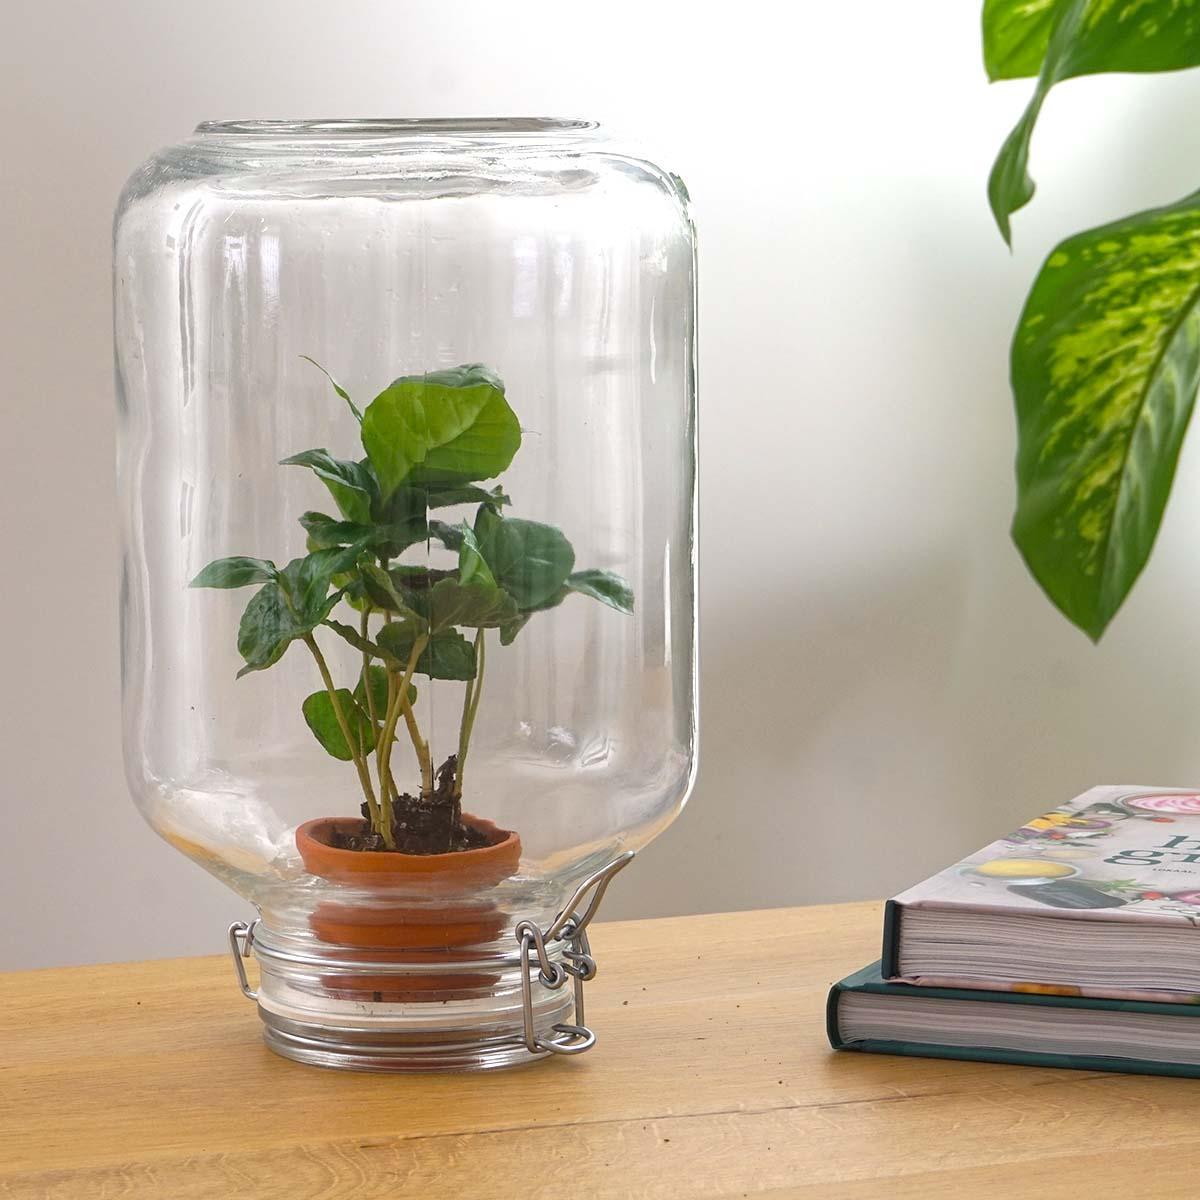 Easyplant - Baby plante sous verre